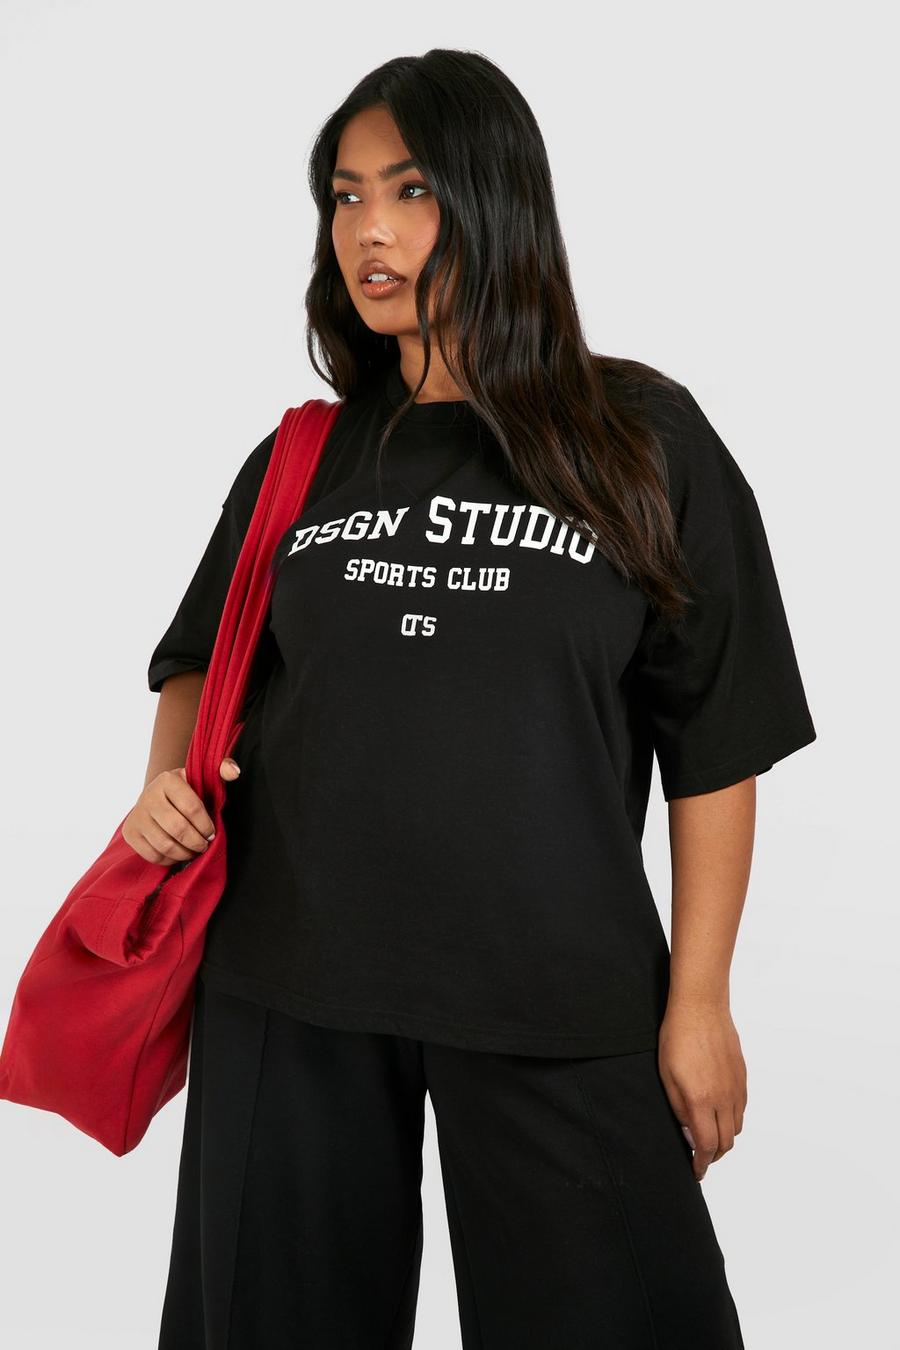 T-shirt Plus Size oversize Dsgn Studio Sports Club, Black